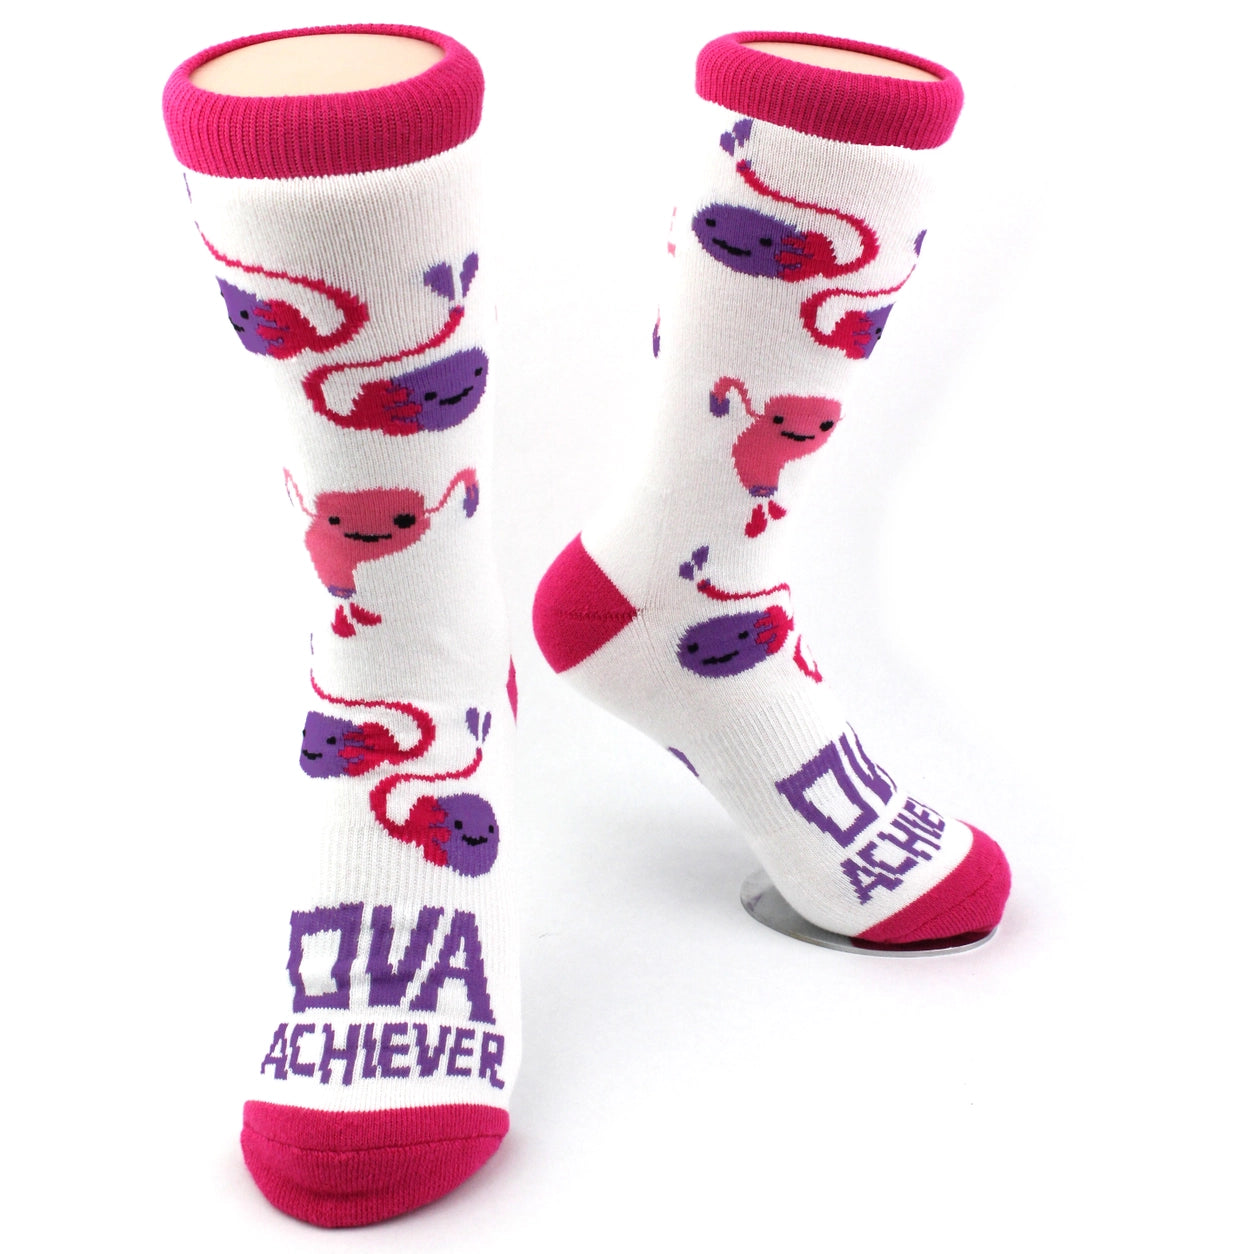 socks uterus & ovaries - Ova Achiever